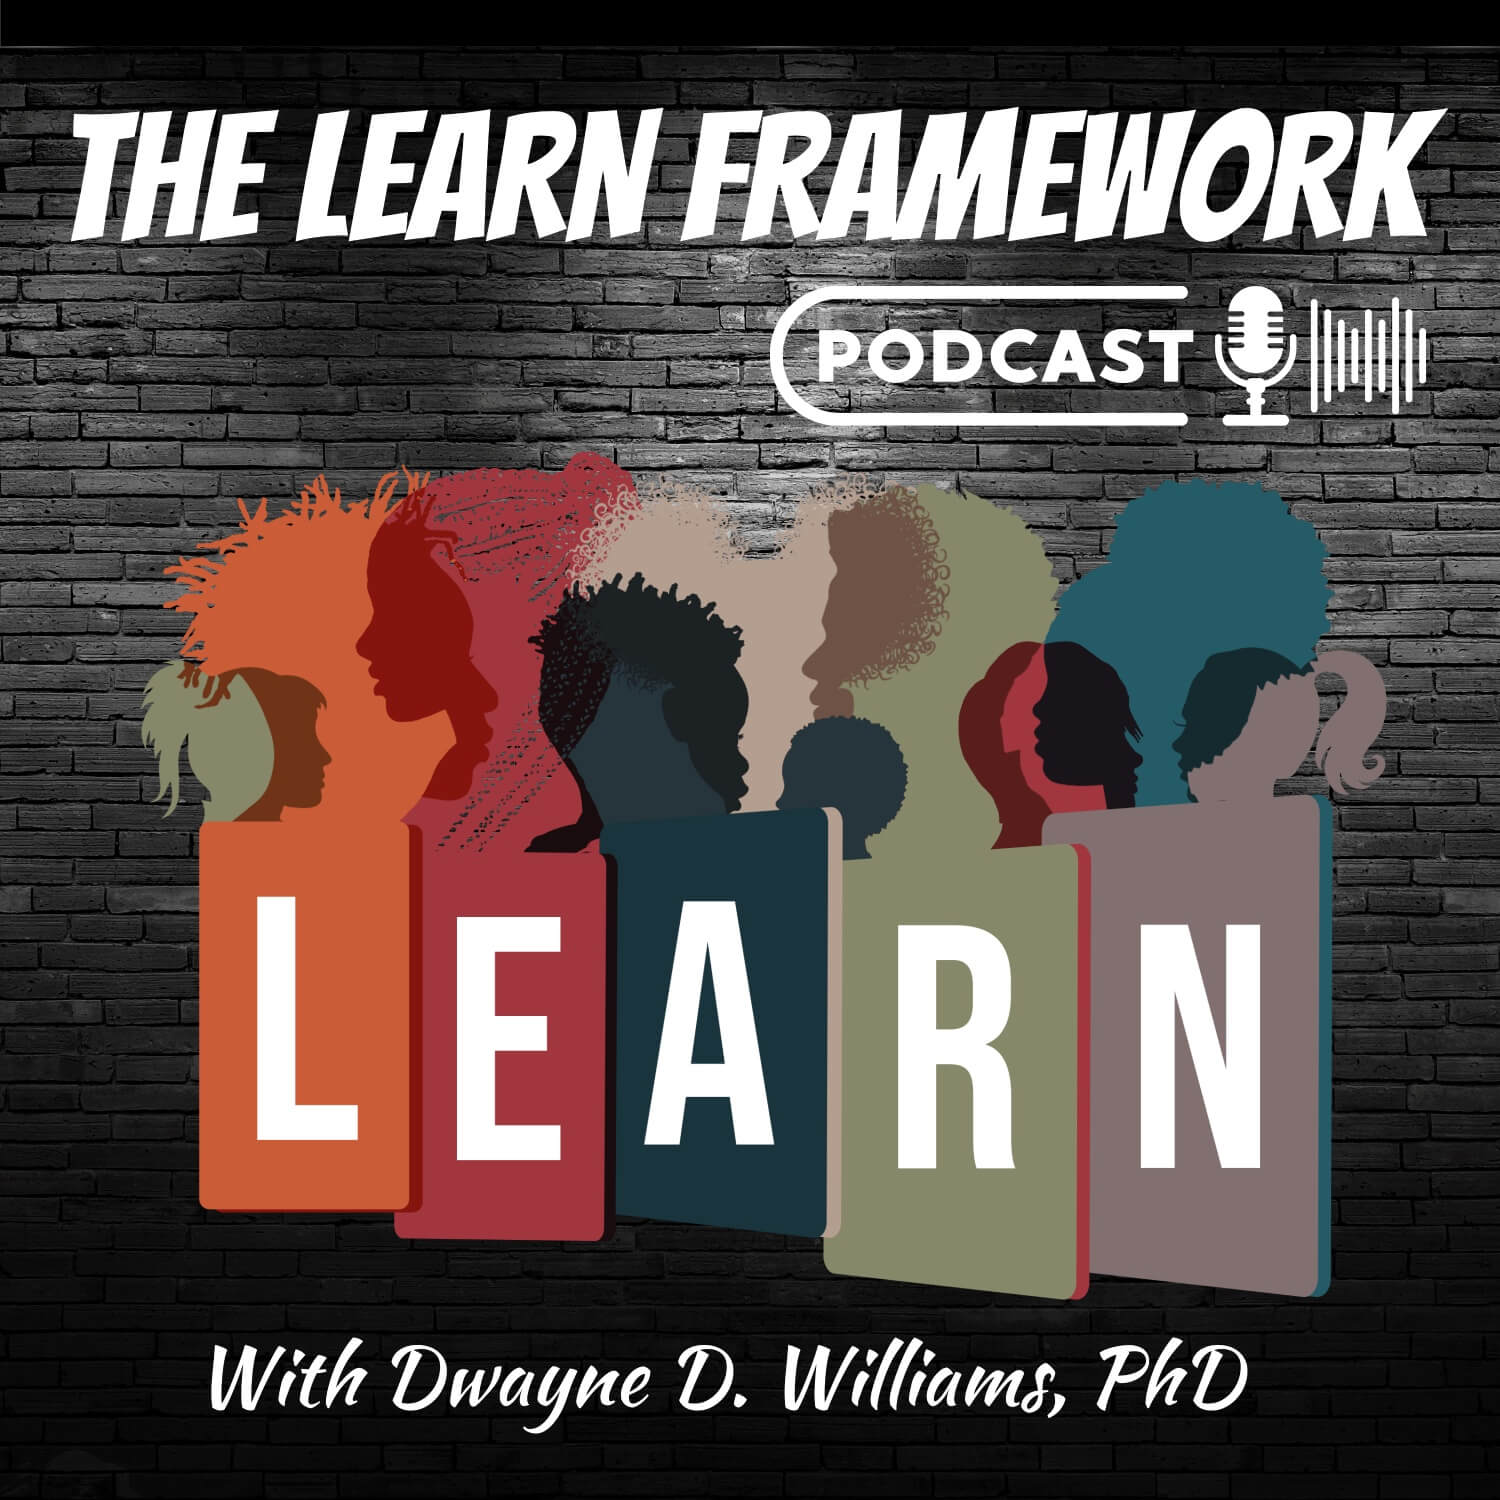 The LEARN Framework Podcast